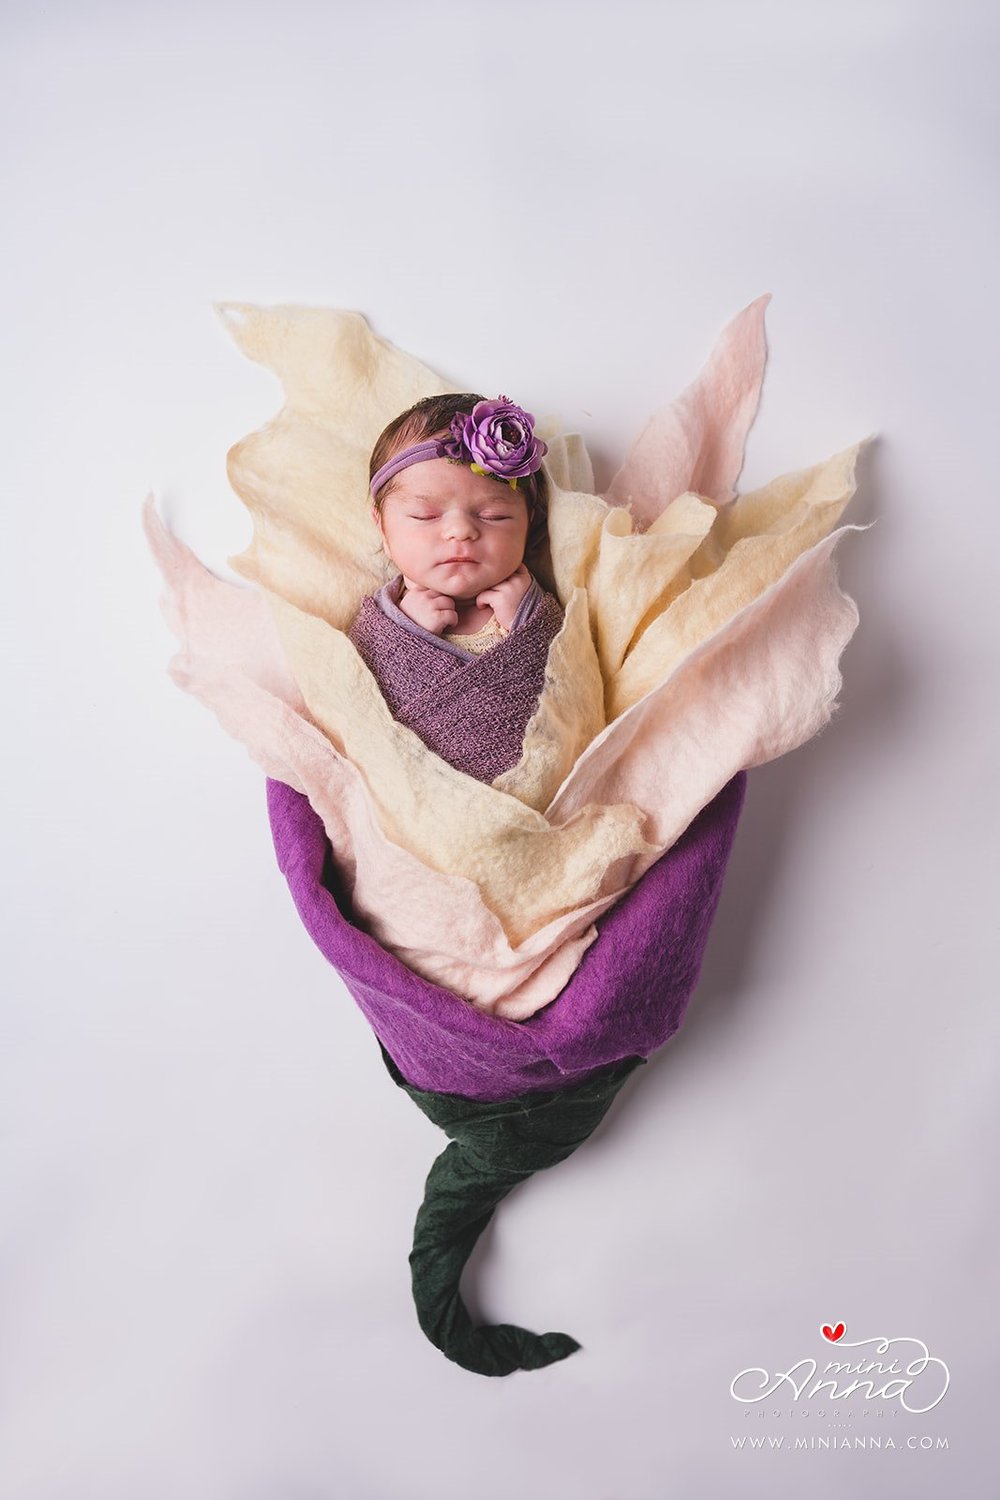 MiniAnna-BethKeolanui-Newborn-5315-retouchedsrgb.jpg